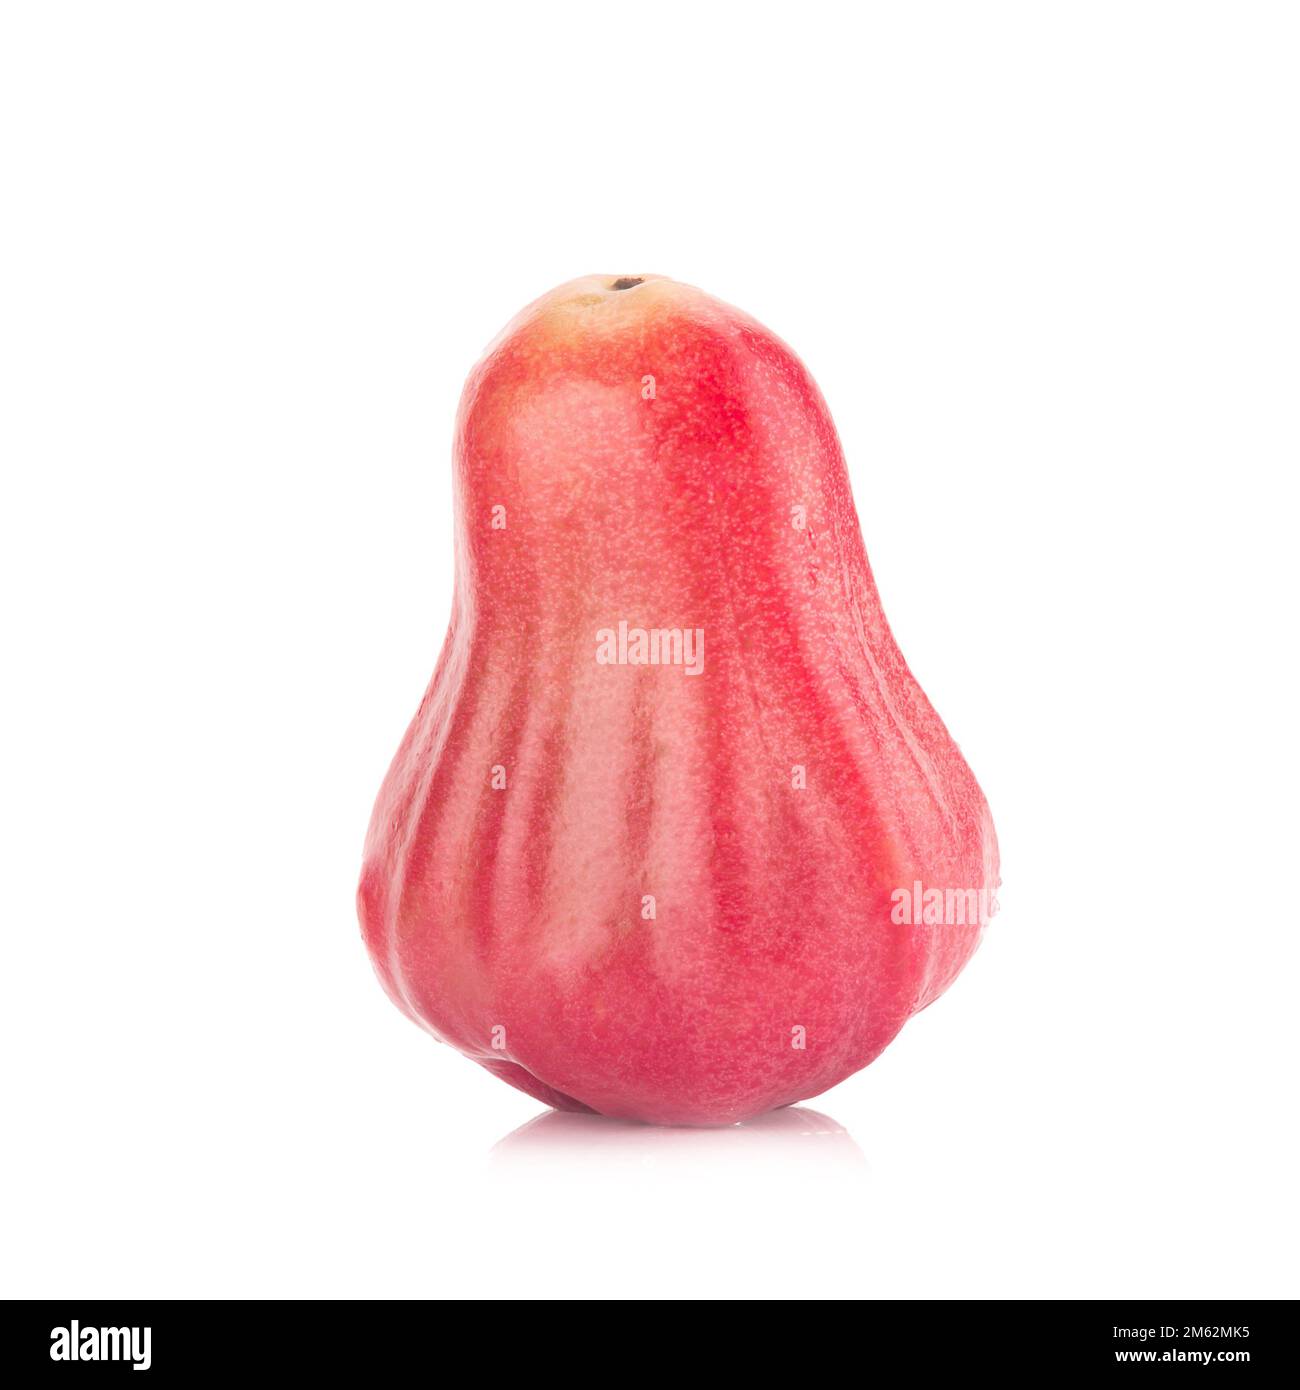 Rose apple isolated on the white background. Stock Photo